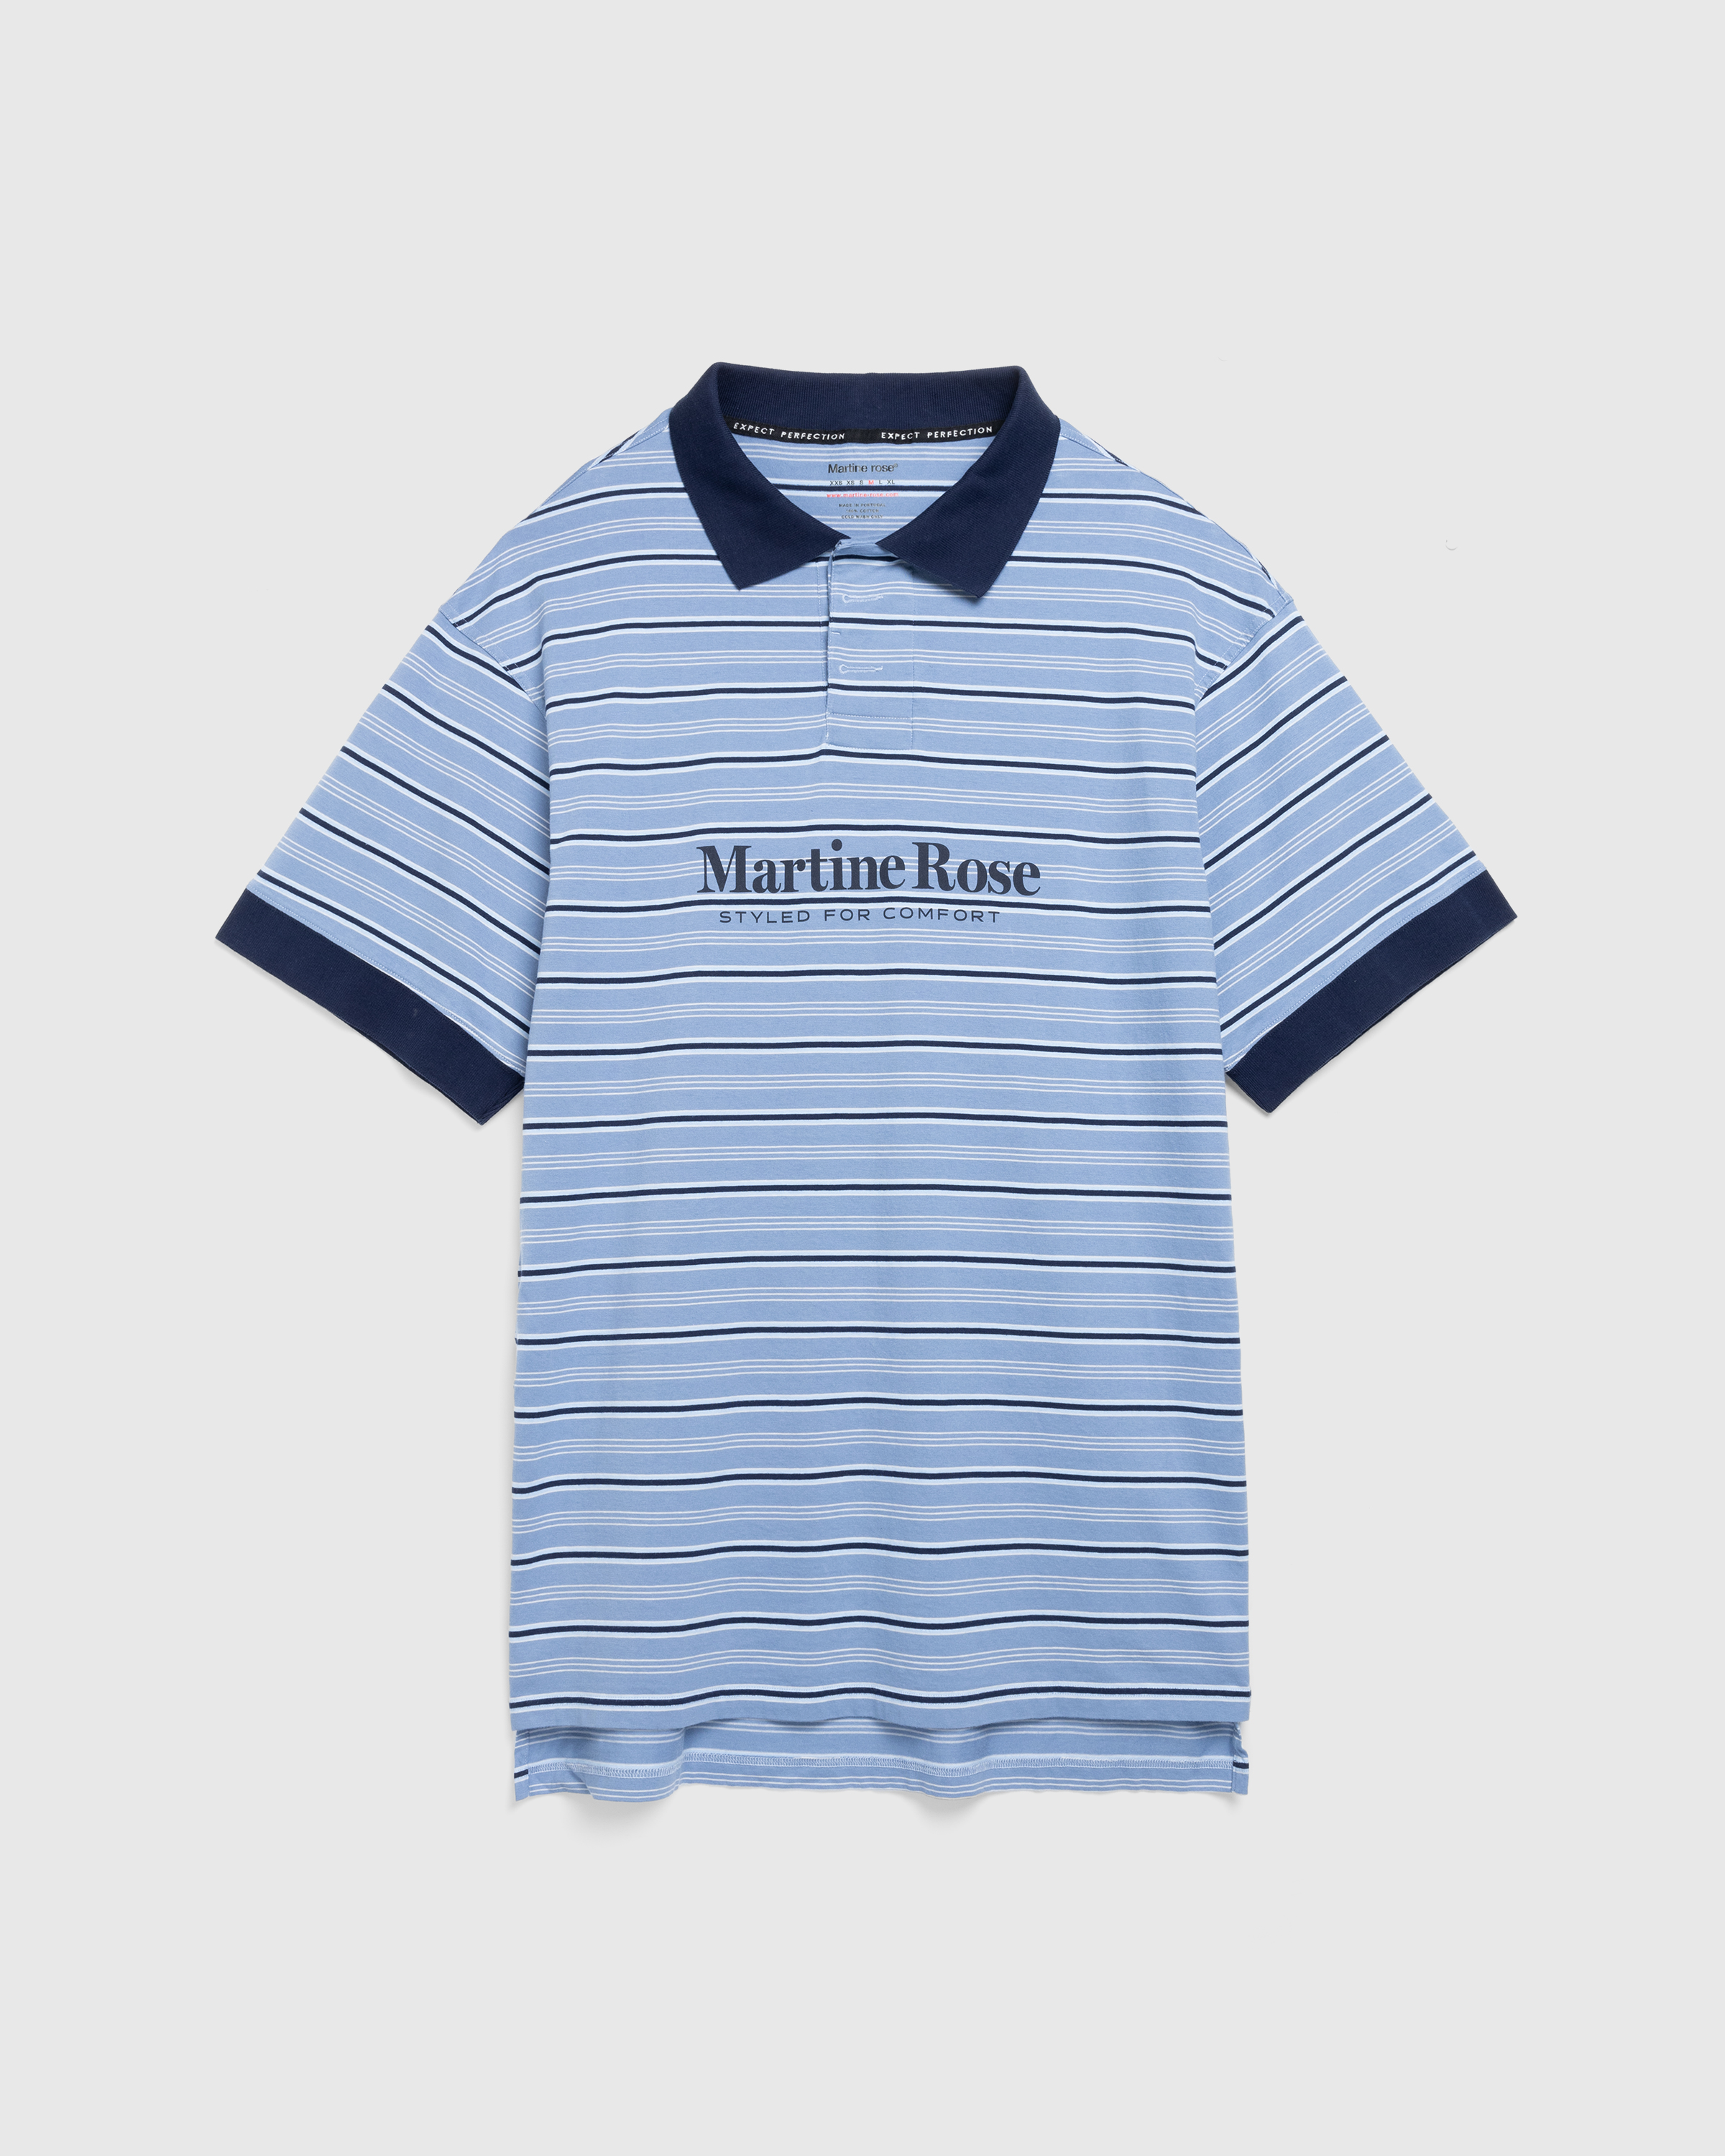 Martine Rose – Stretched Polo Blue Stripe - Polos - Blue - Image 1